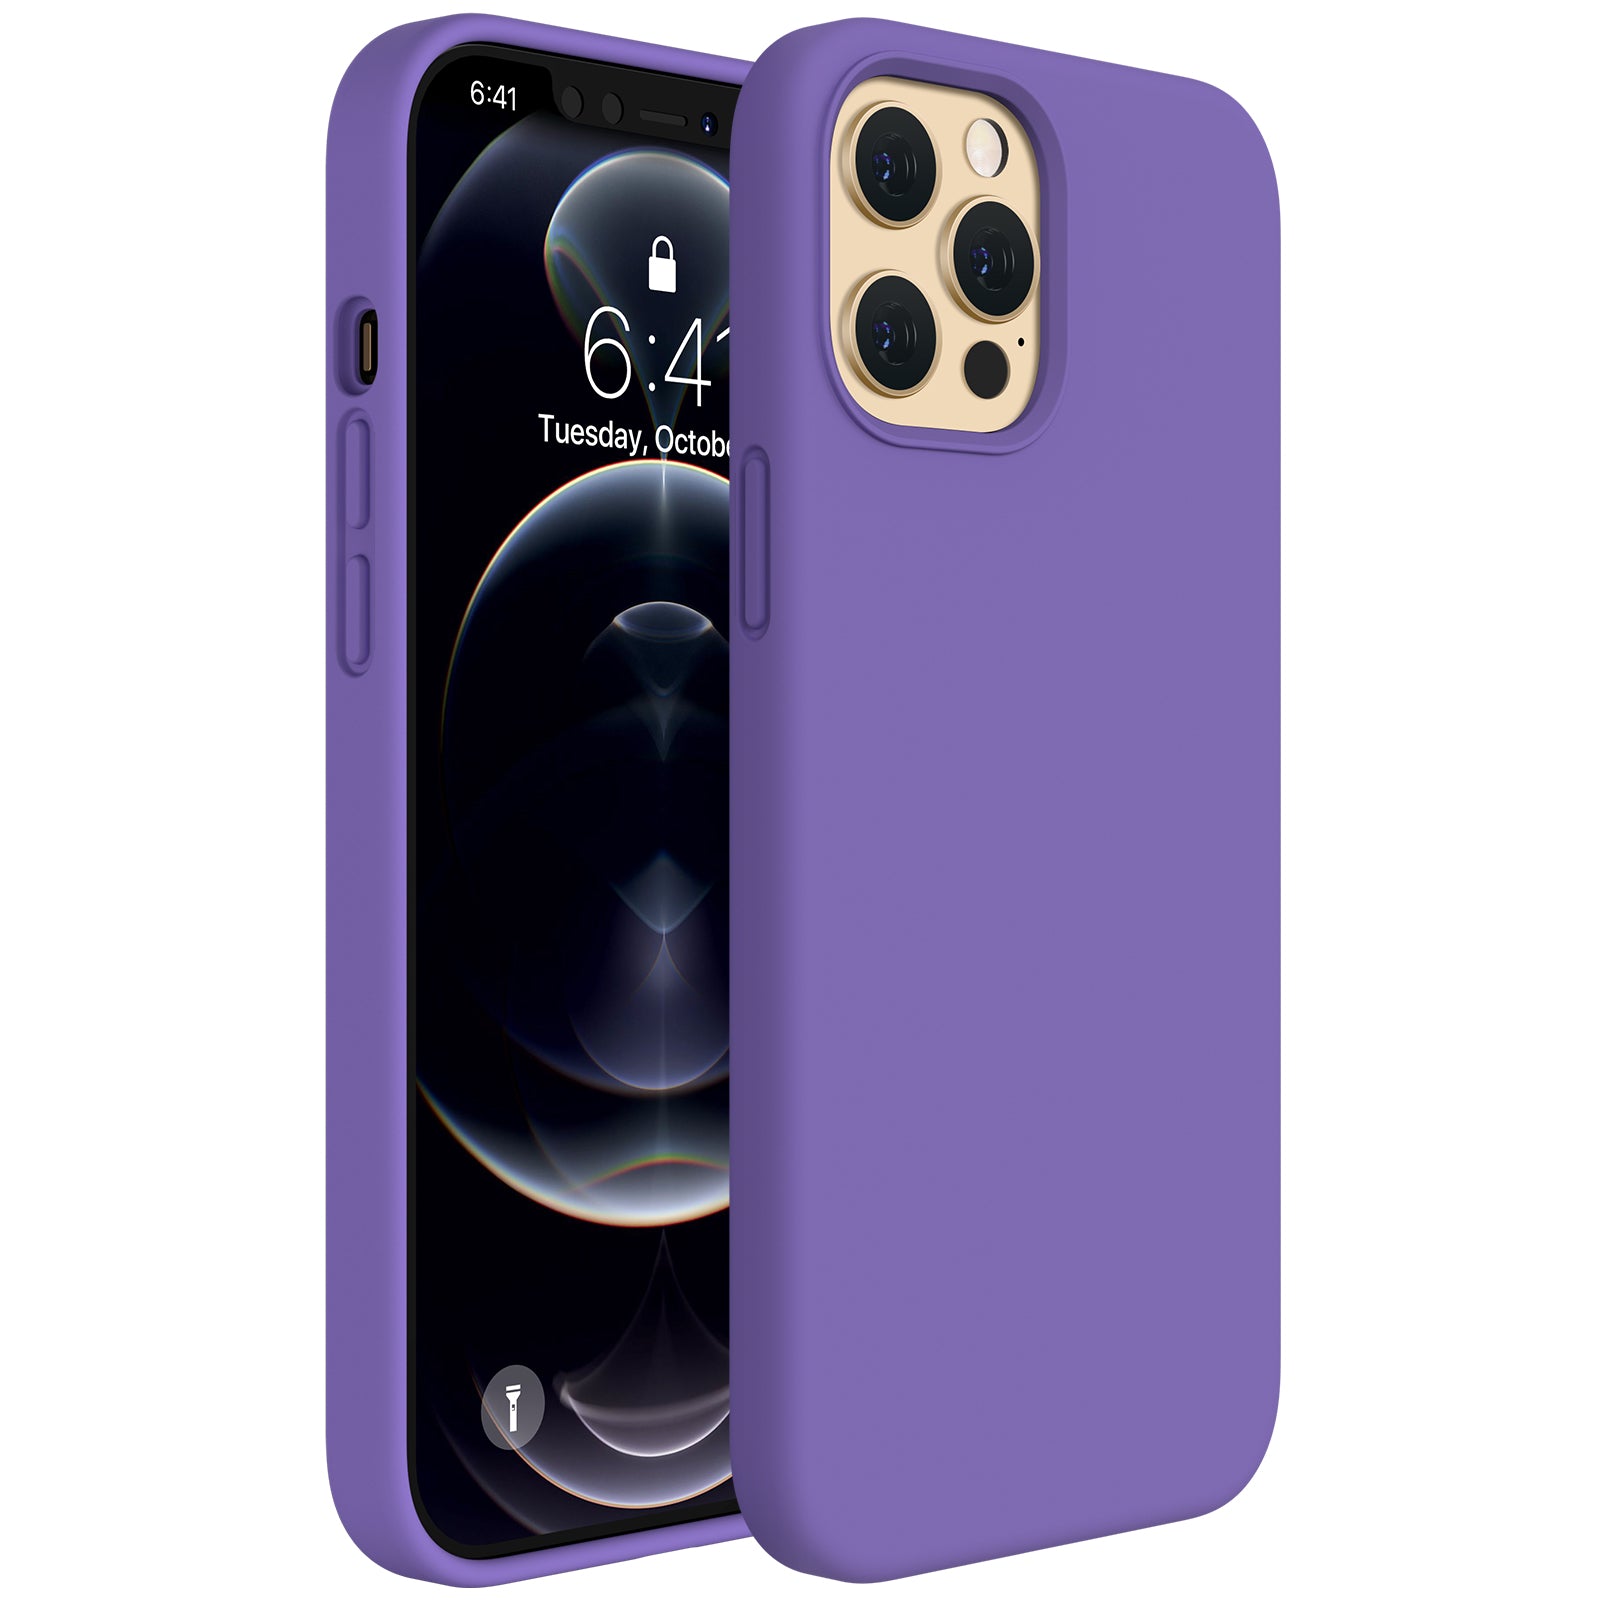 Order Stylish Apple iPhone 12 Pro Max Cases